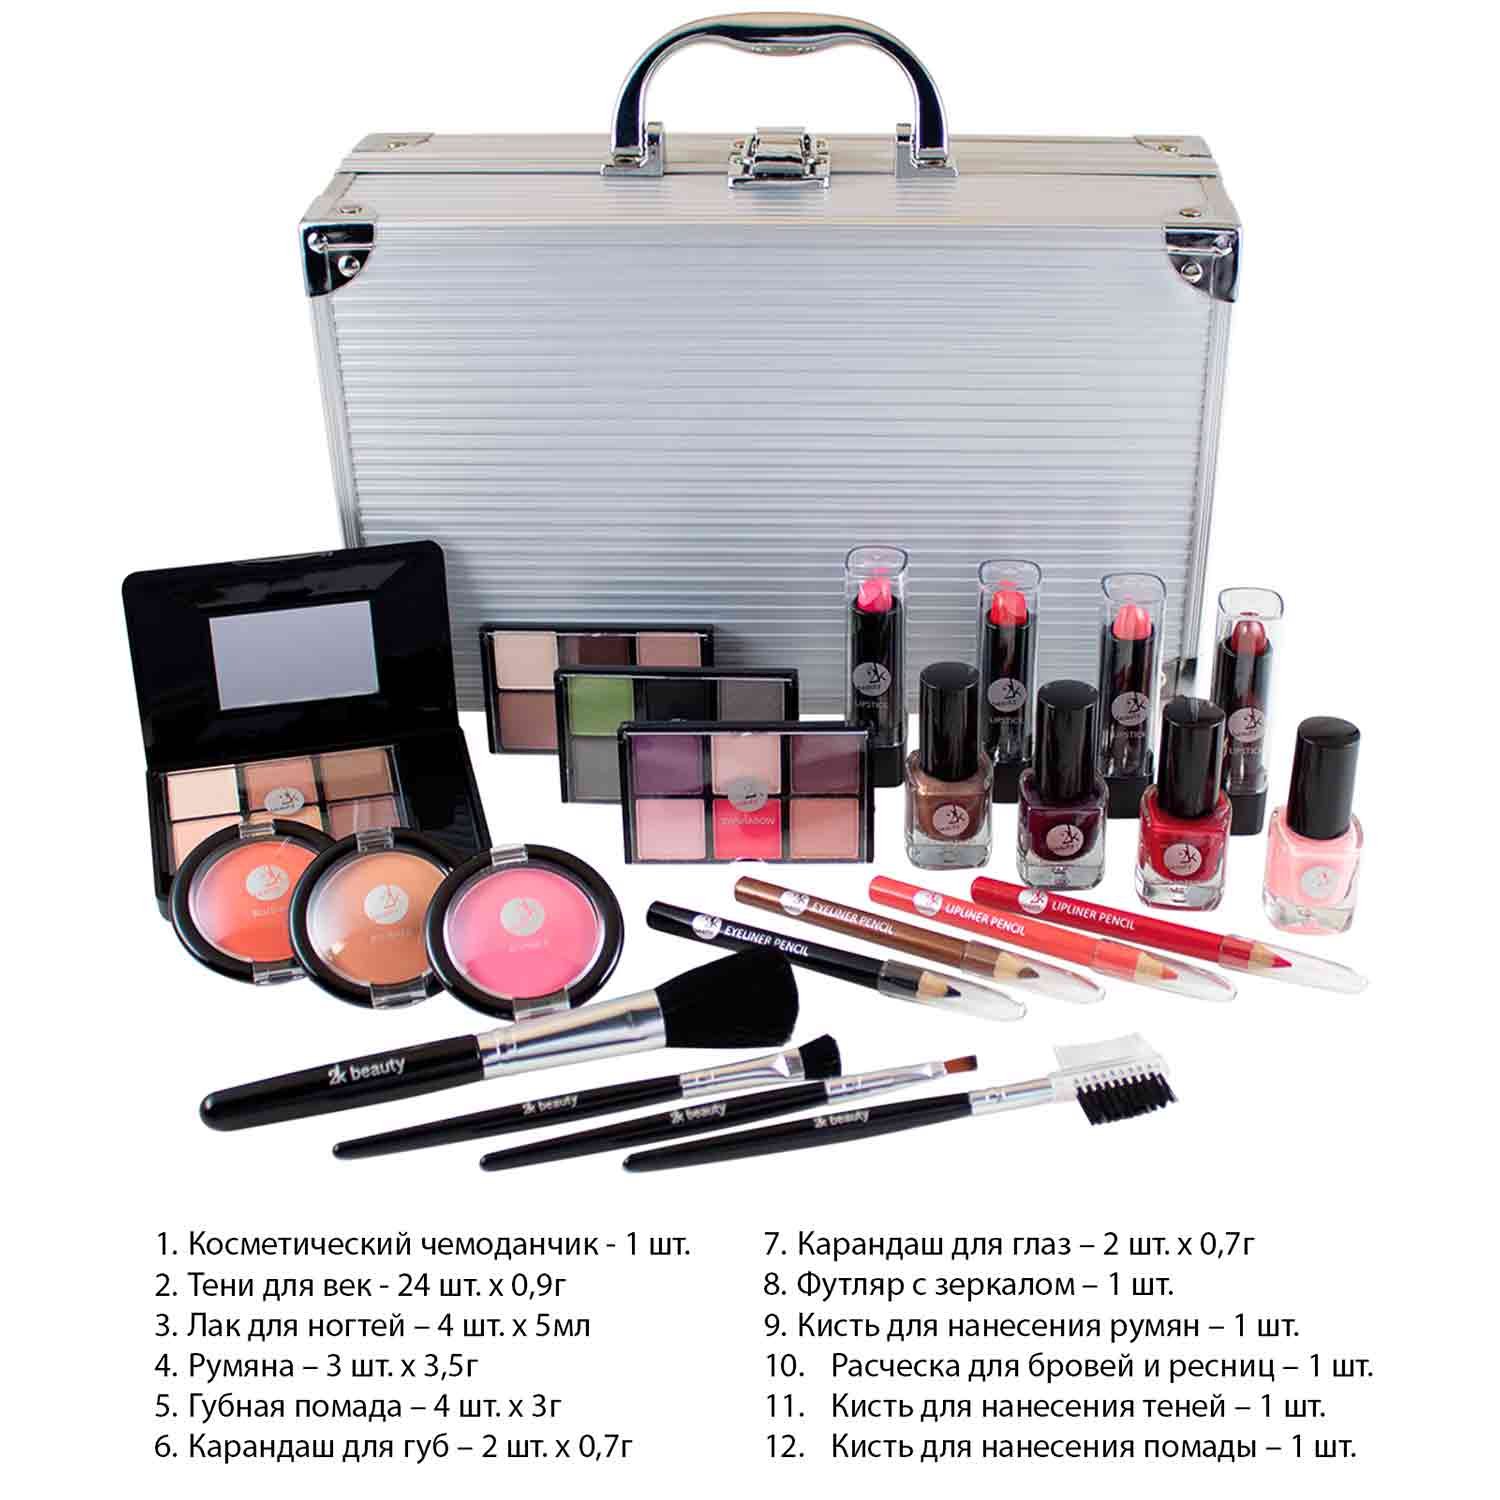 Подарочный бьюти бокс чемодан 2K Beauty Декоративная косметика: тени .